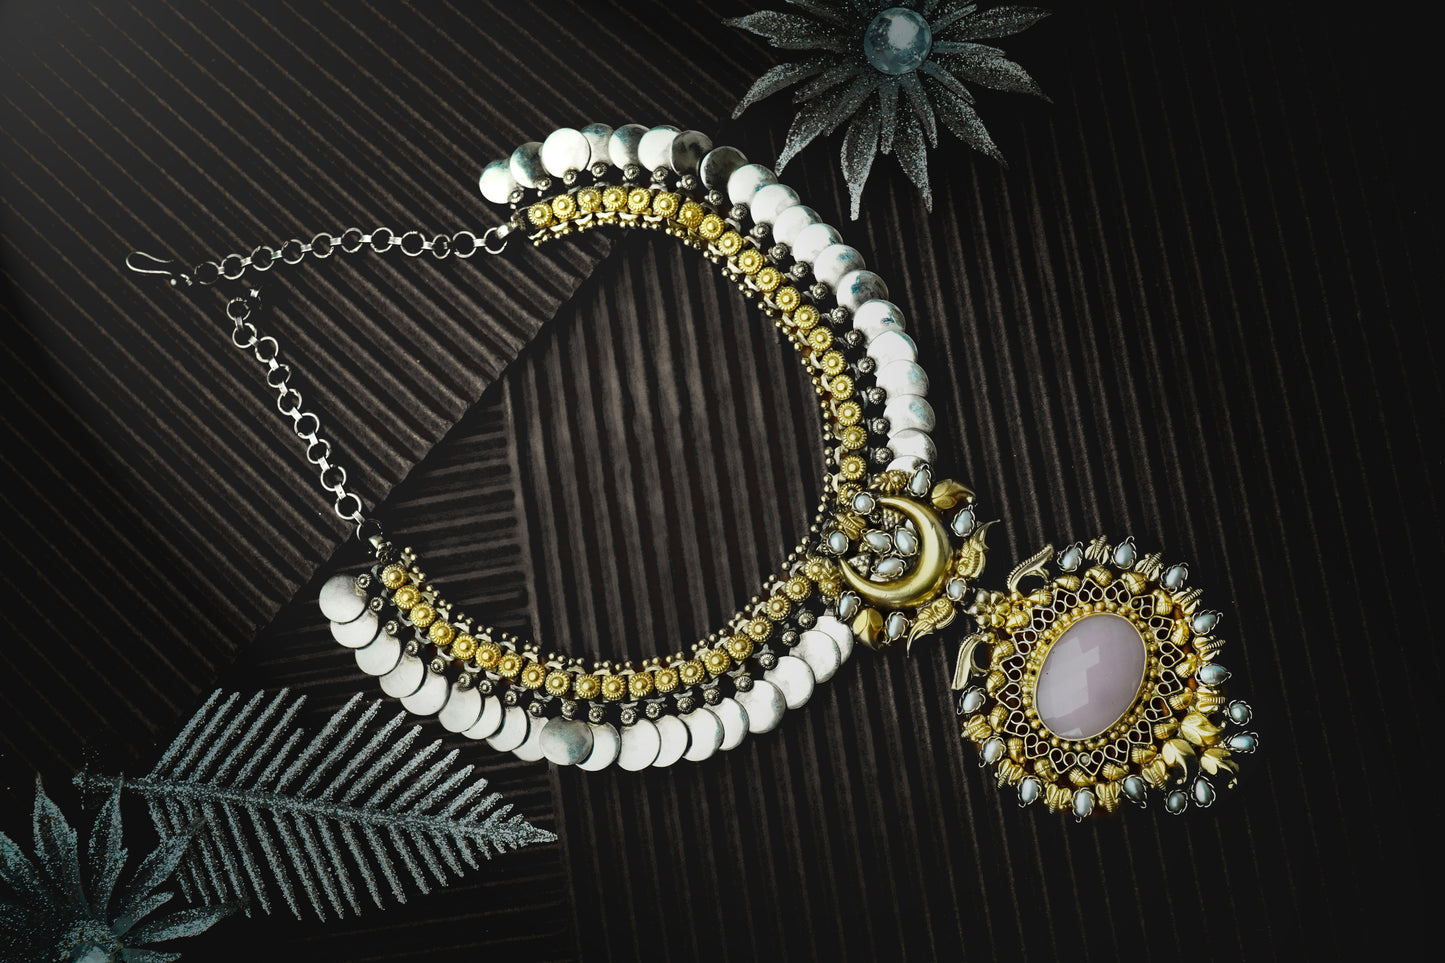 Silver Two Tone Coin Necklace with Rose Quartz - Neeta Boochra Jewellery